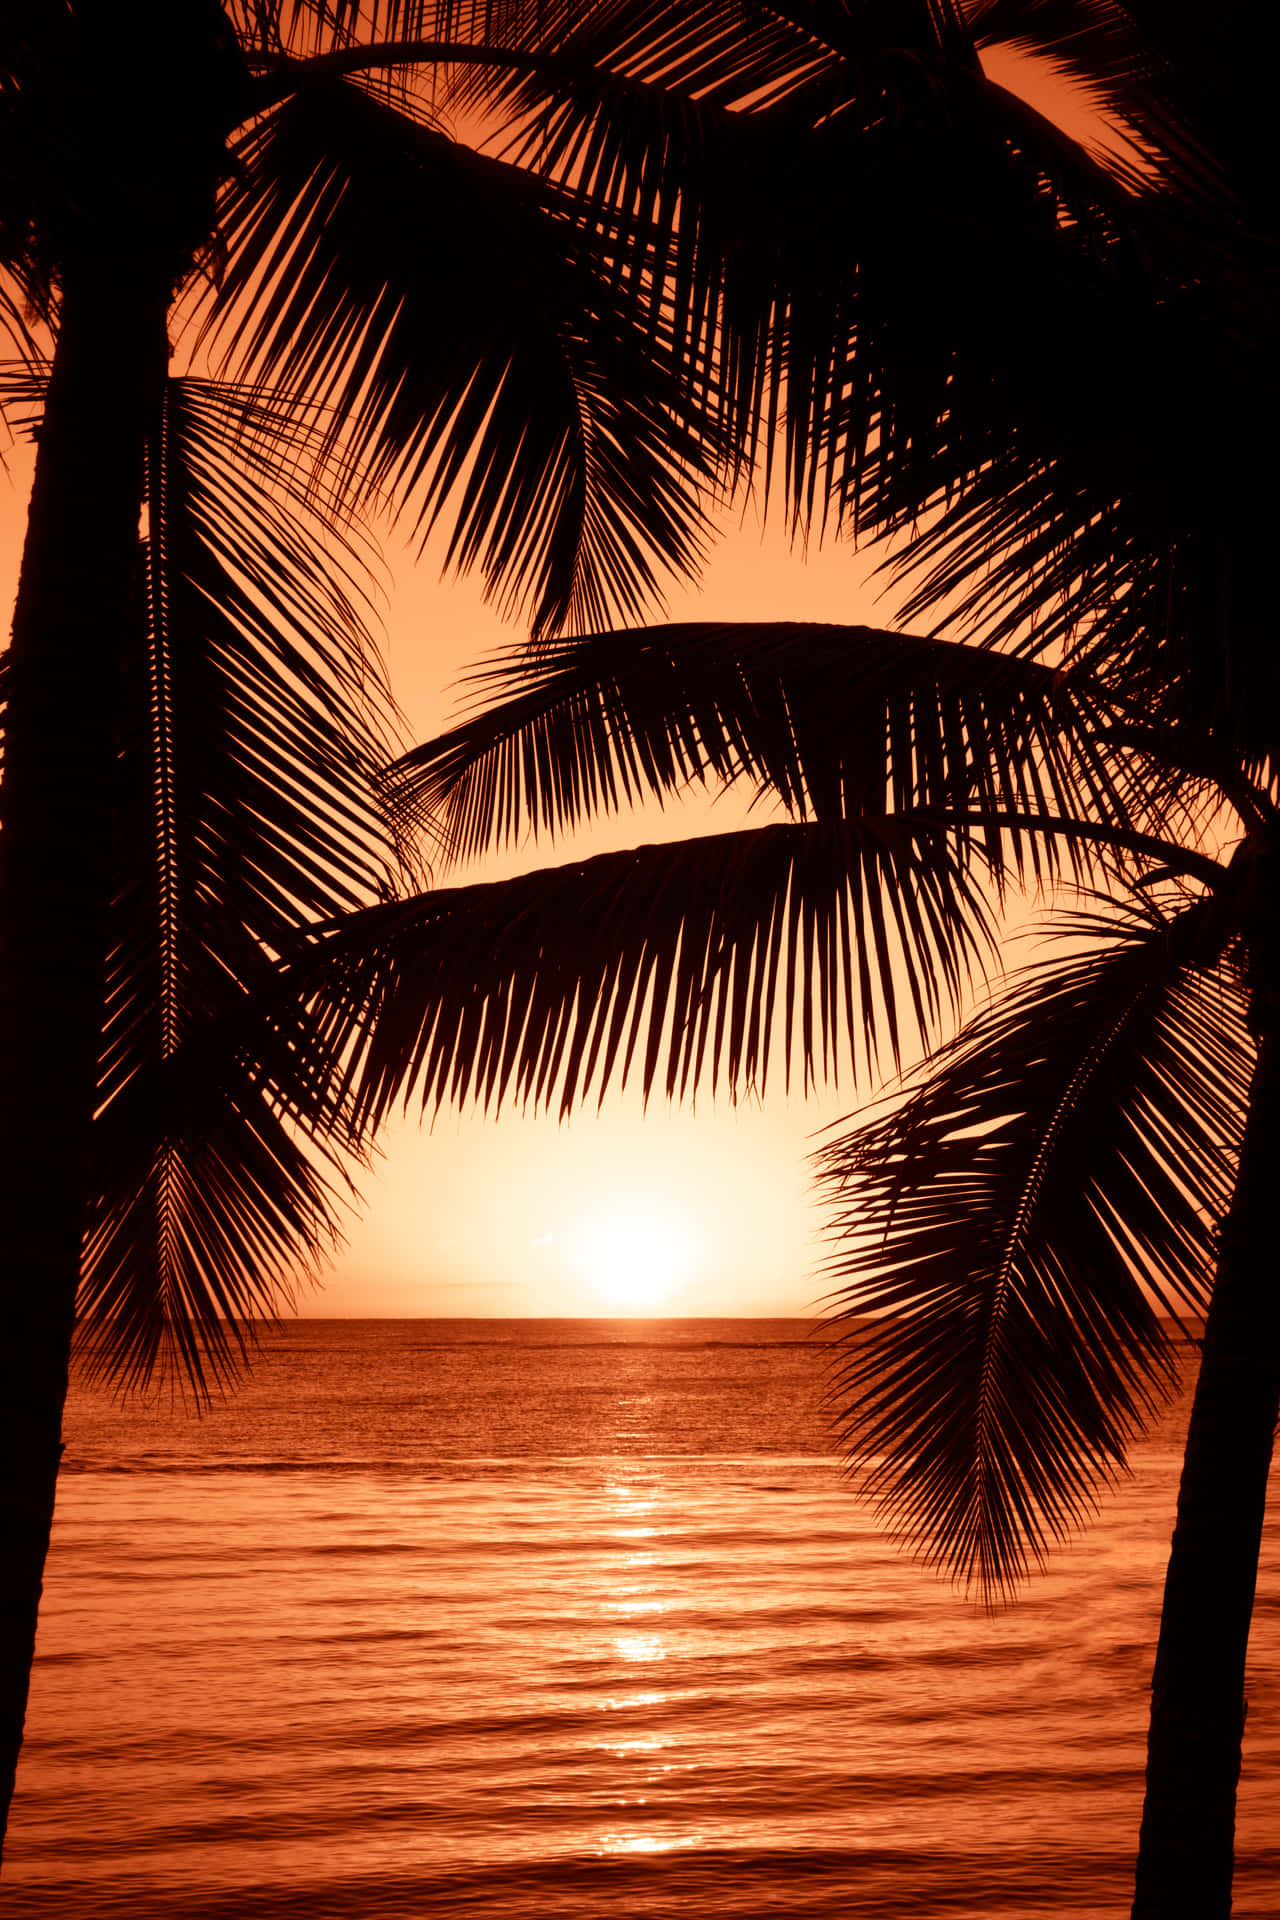 Etsmukt Solnedgangsbillede Ved Stranden.